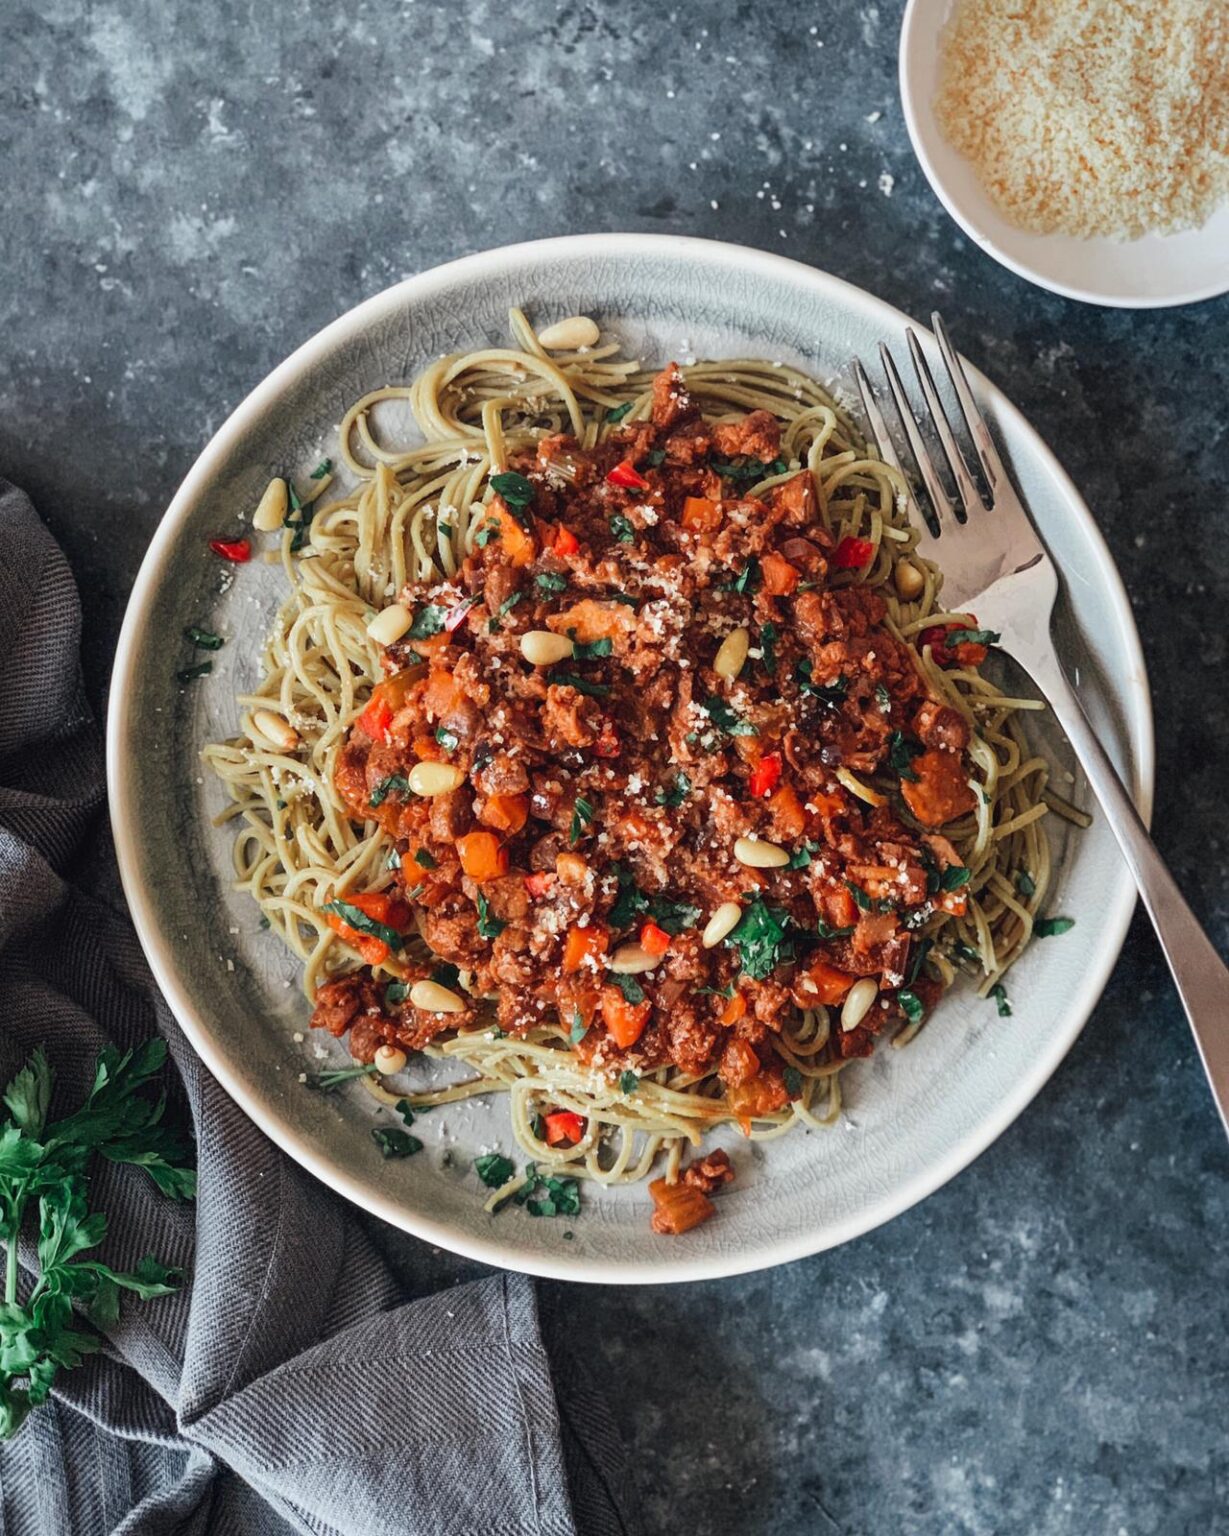 Explore Cuisine’s Edamame Spaghetti with Soya & Mushroom Ragu - The ...